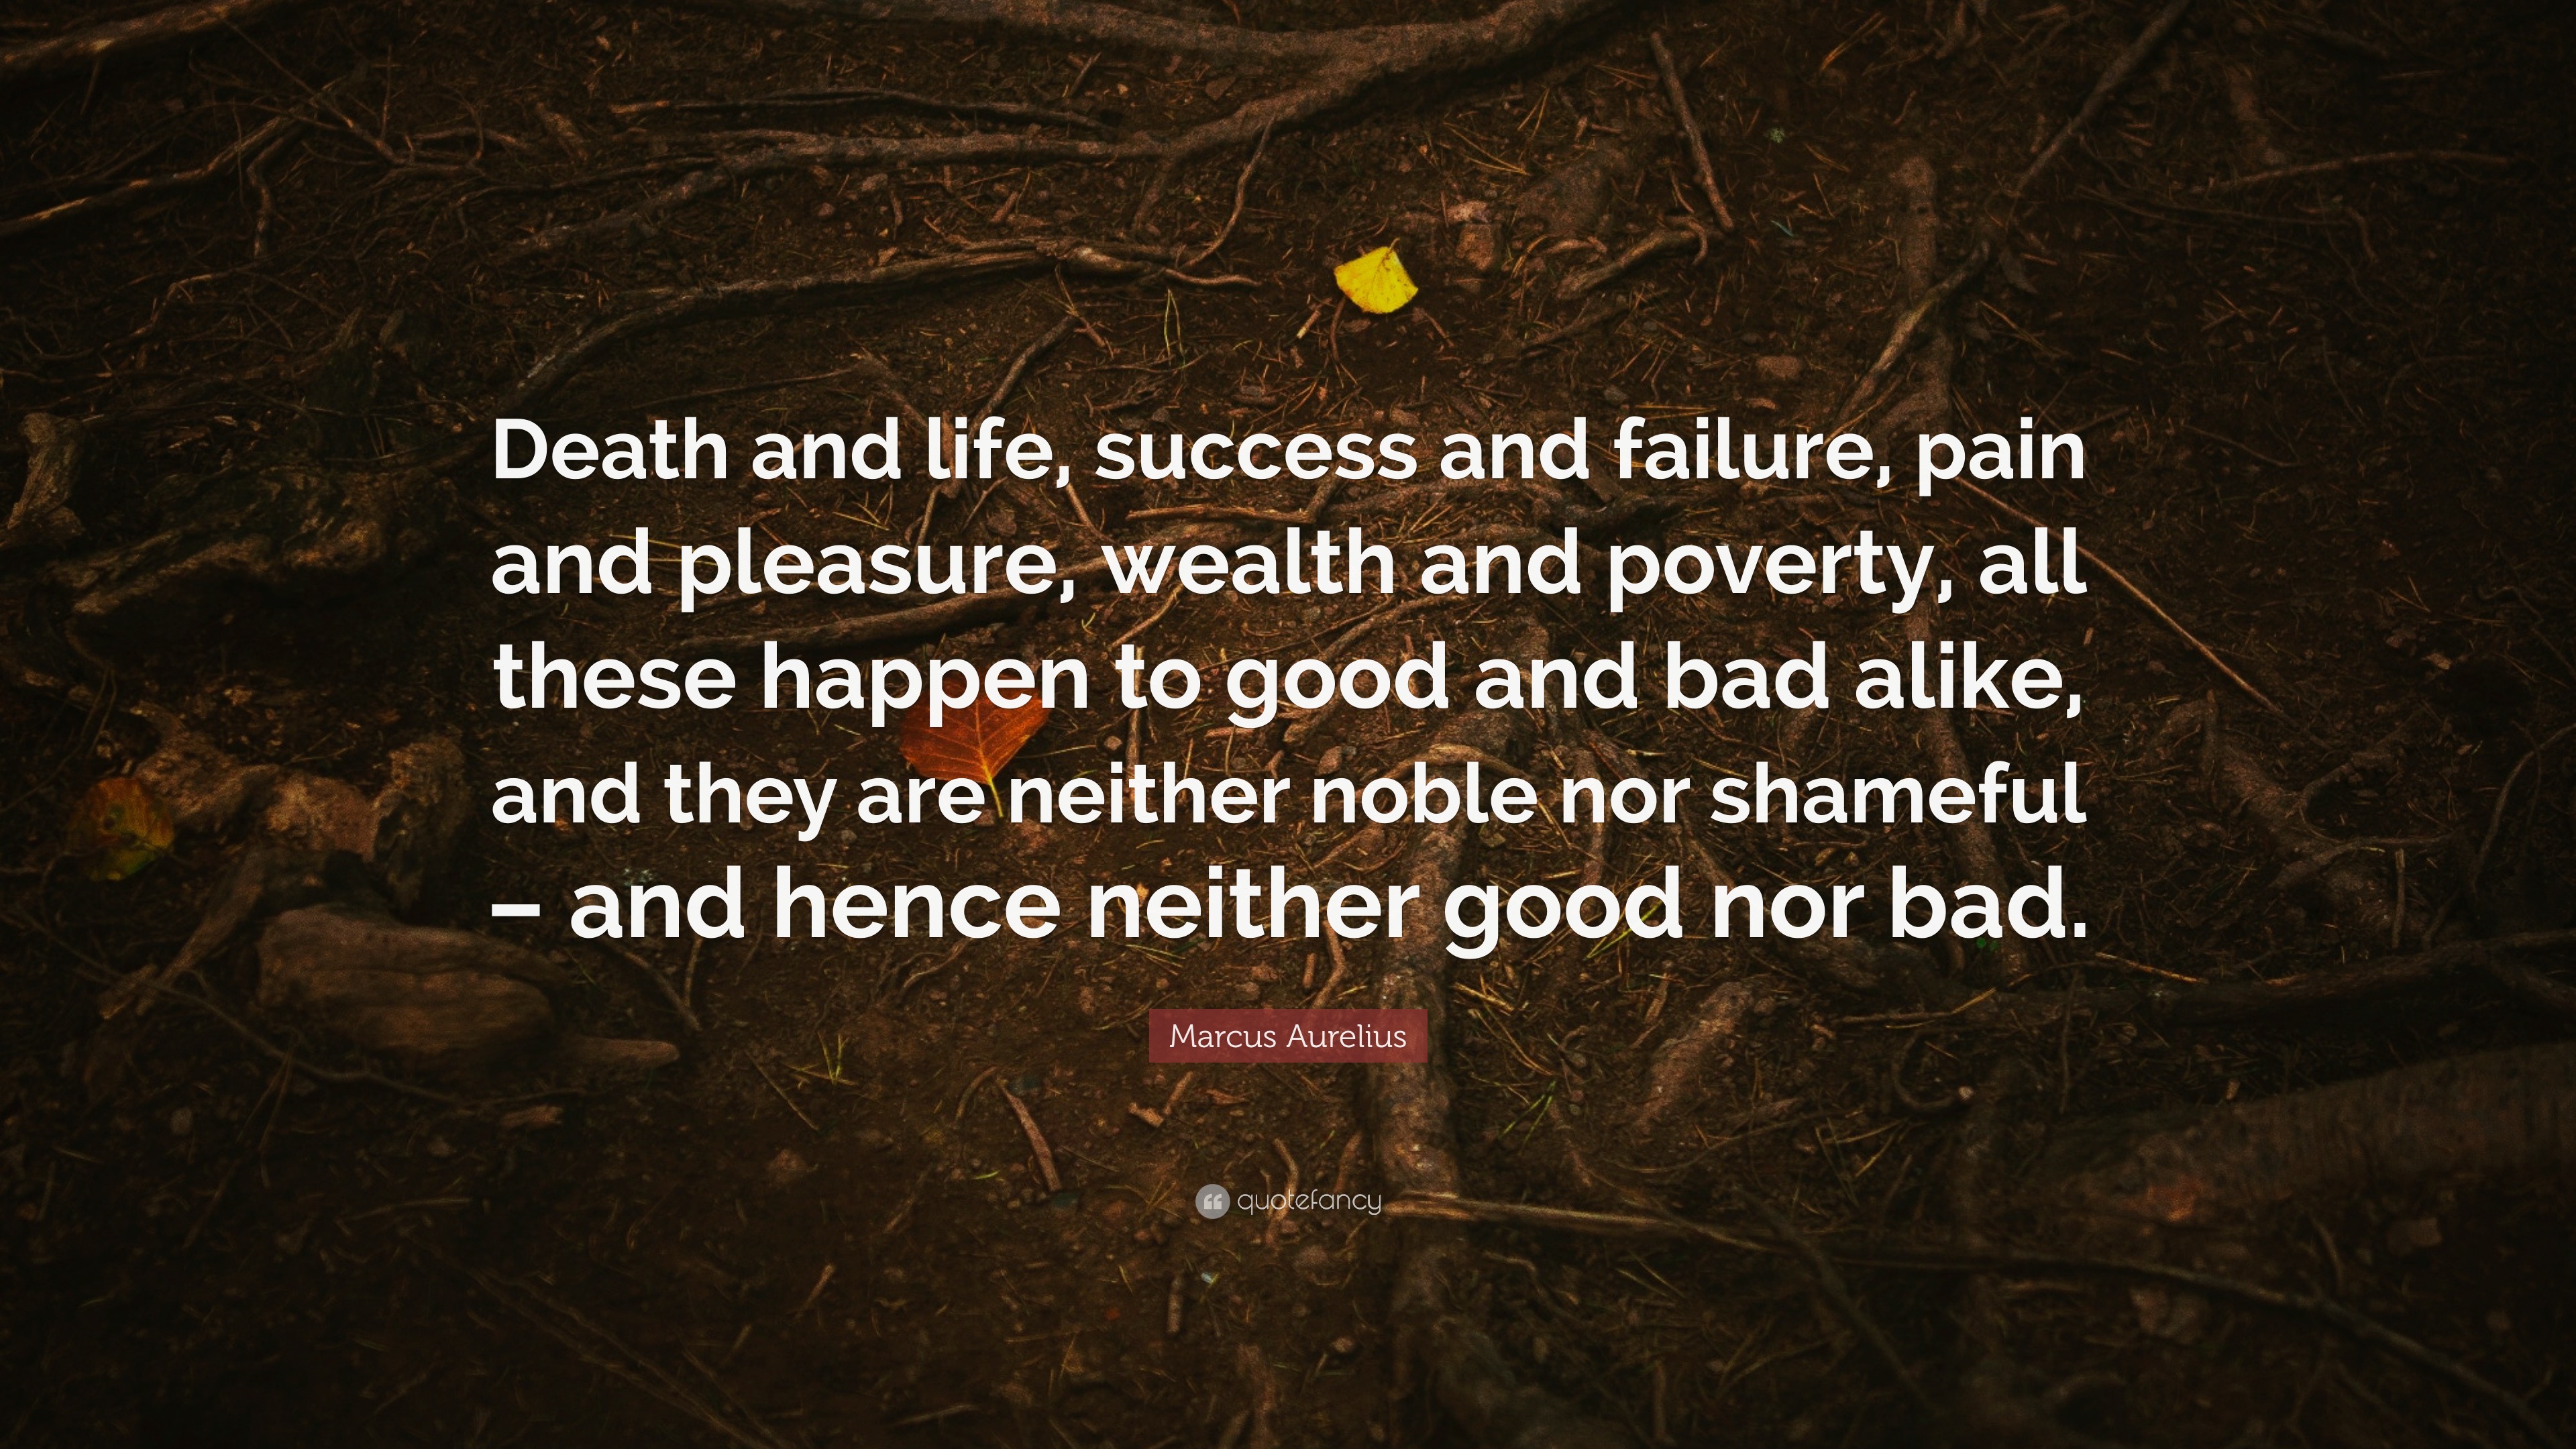 Marcus Aurelius Quote: “Death and life, success and failure, pain and ...